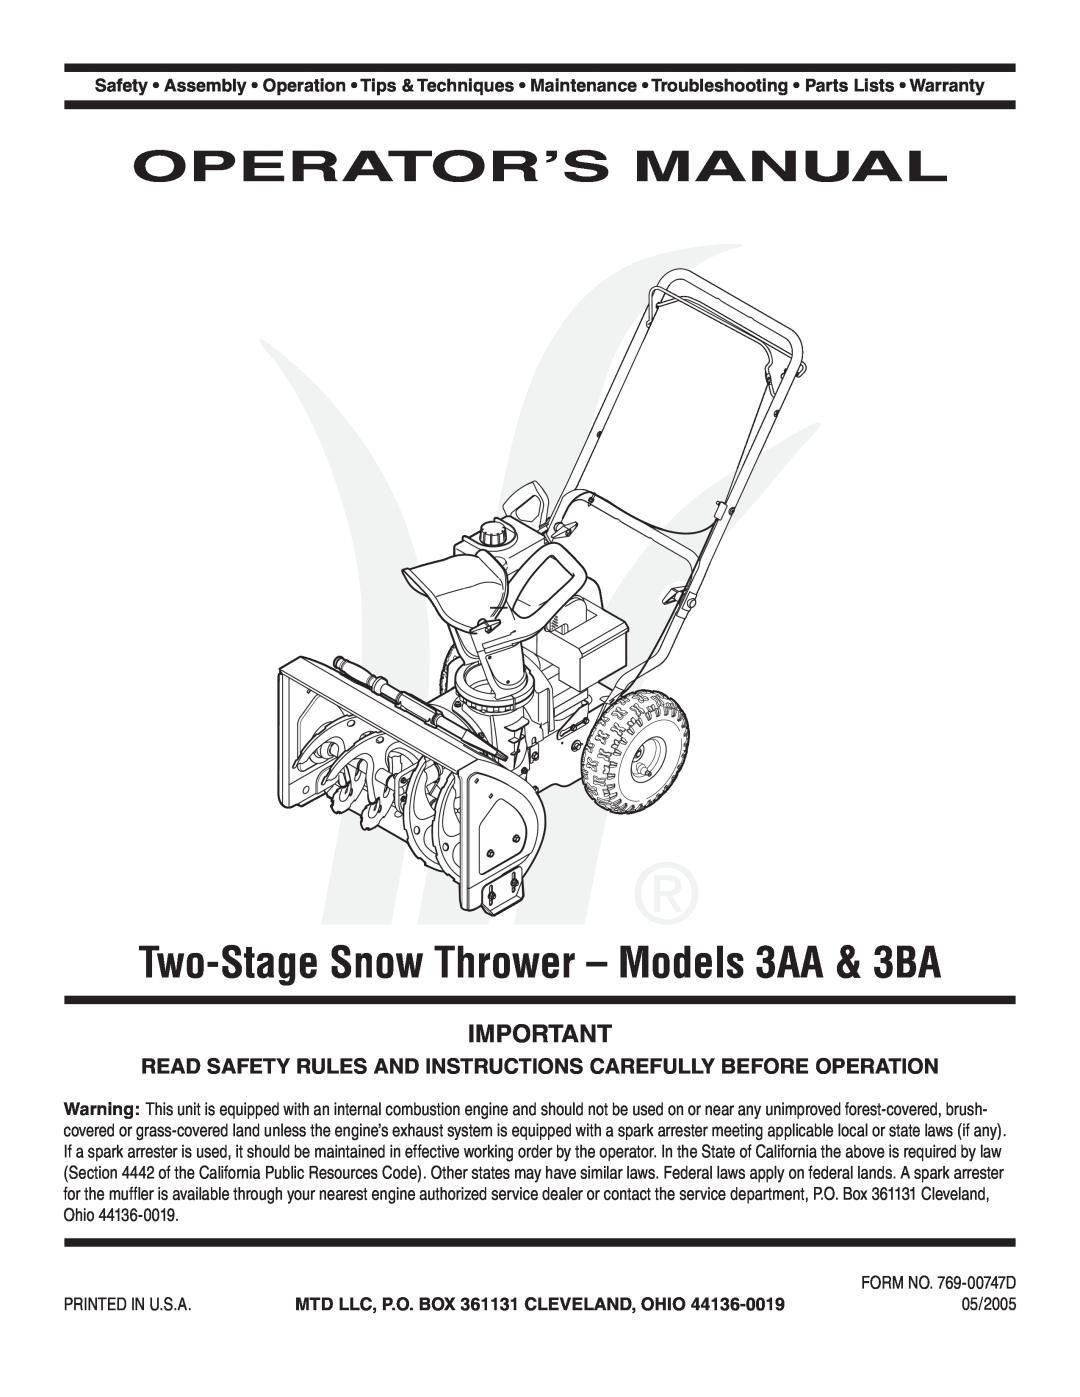 Bolens warranty Operator’S Manual, Two-Stage Snow Thrower - Models 3AA & 3BA, MTD LLC, P.O. BOX 361131 CLEVELAND, OHIO 